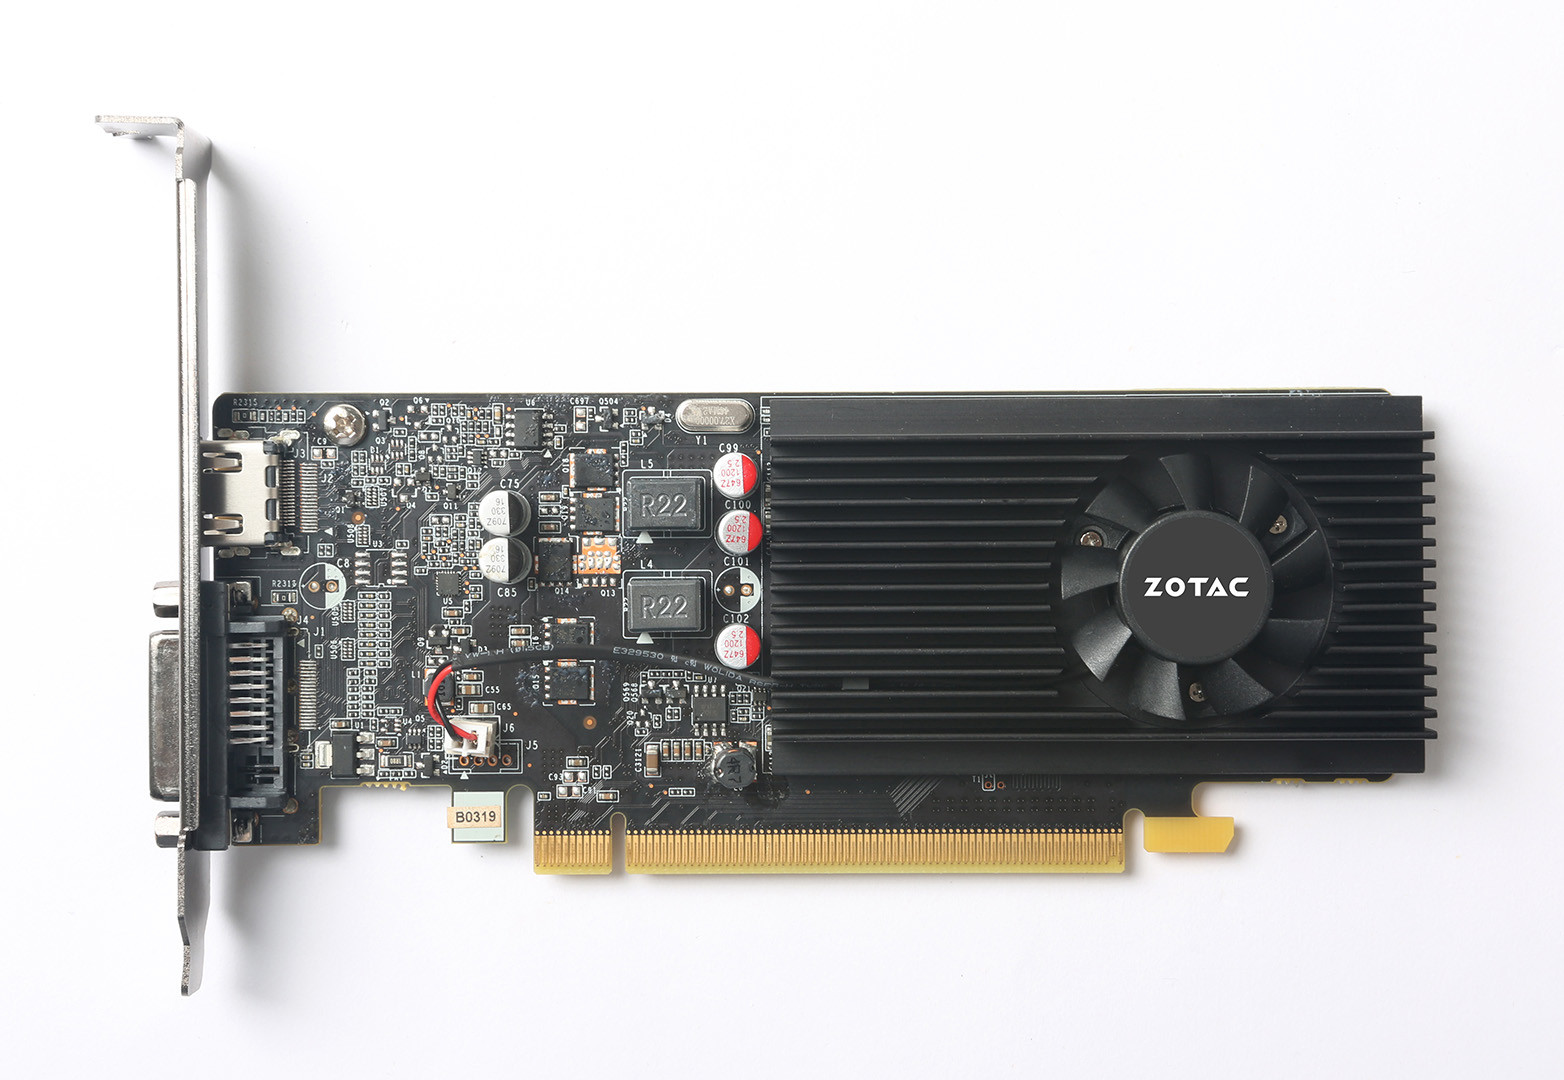 Immagine pubblicata in relazione al seguente contenuto: Zotac introduce la video card low-power e low-profile GeForce GT 1030 | Nome immagine: news26348_Zotac-GeForce-GT-1030_2.jpg